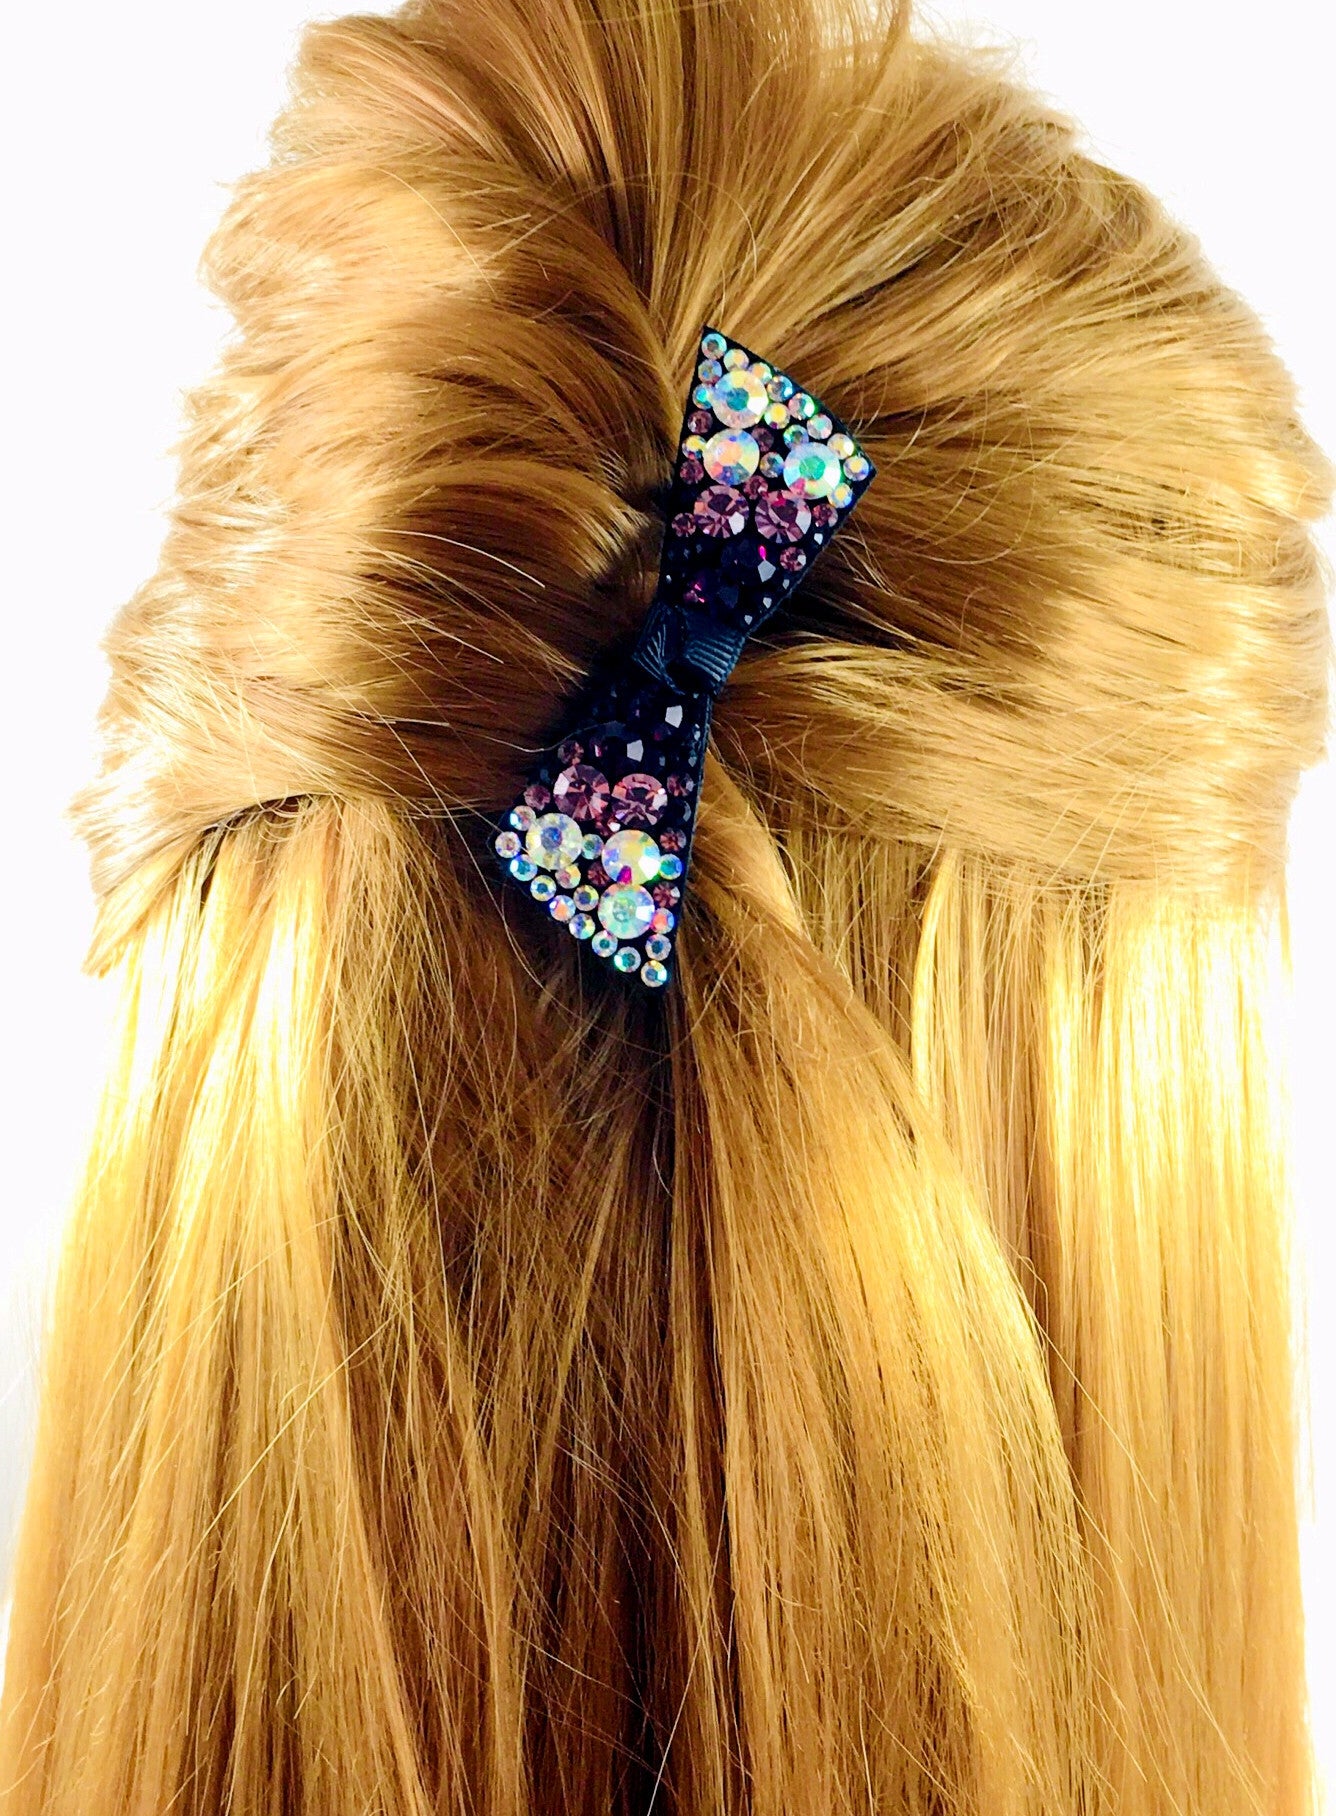 Urban Bow Knot Hair Clip Swarovski Crystal Clamp Acrylic black base AB Pink Magenta, Hair Clip - MOGHANT